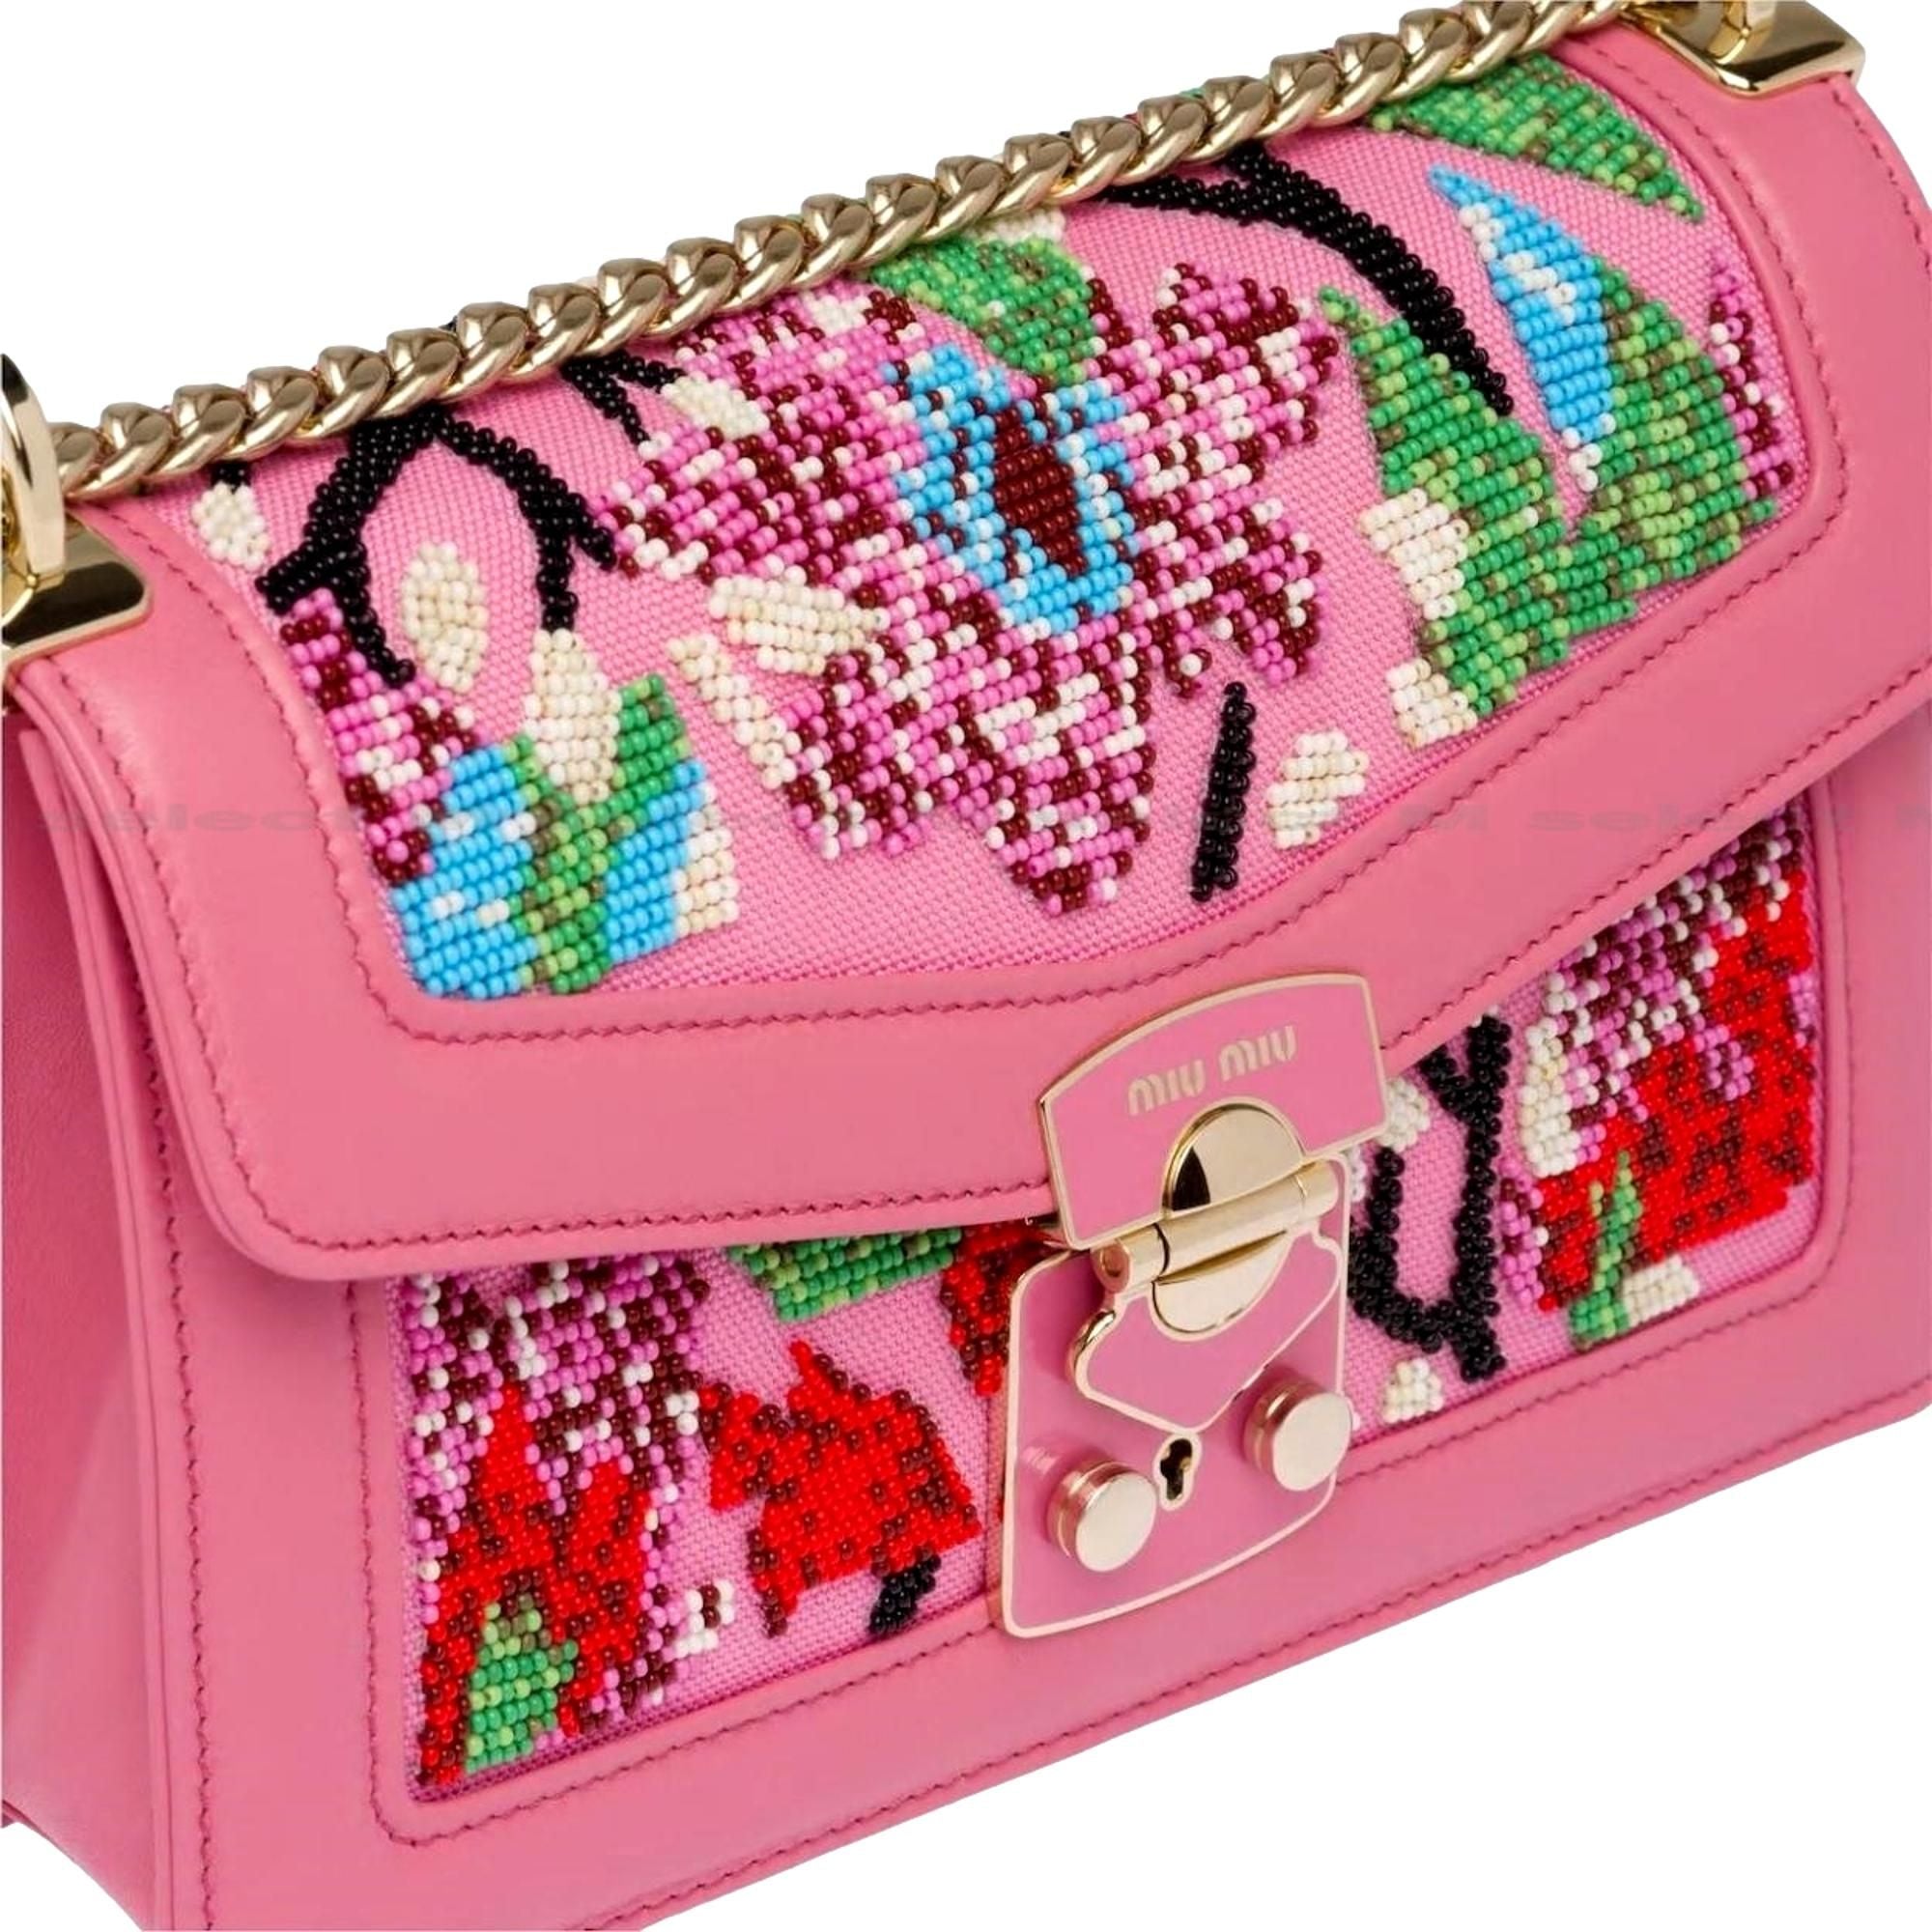 Miu Miu Canapa Geranio Pink Floral Beaded Shoulder Bag at_Queen_Bee_of_Beverly_Hills